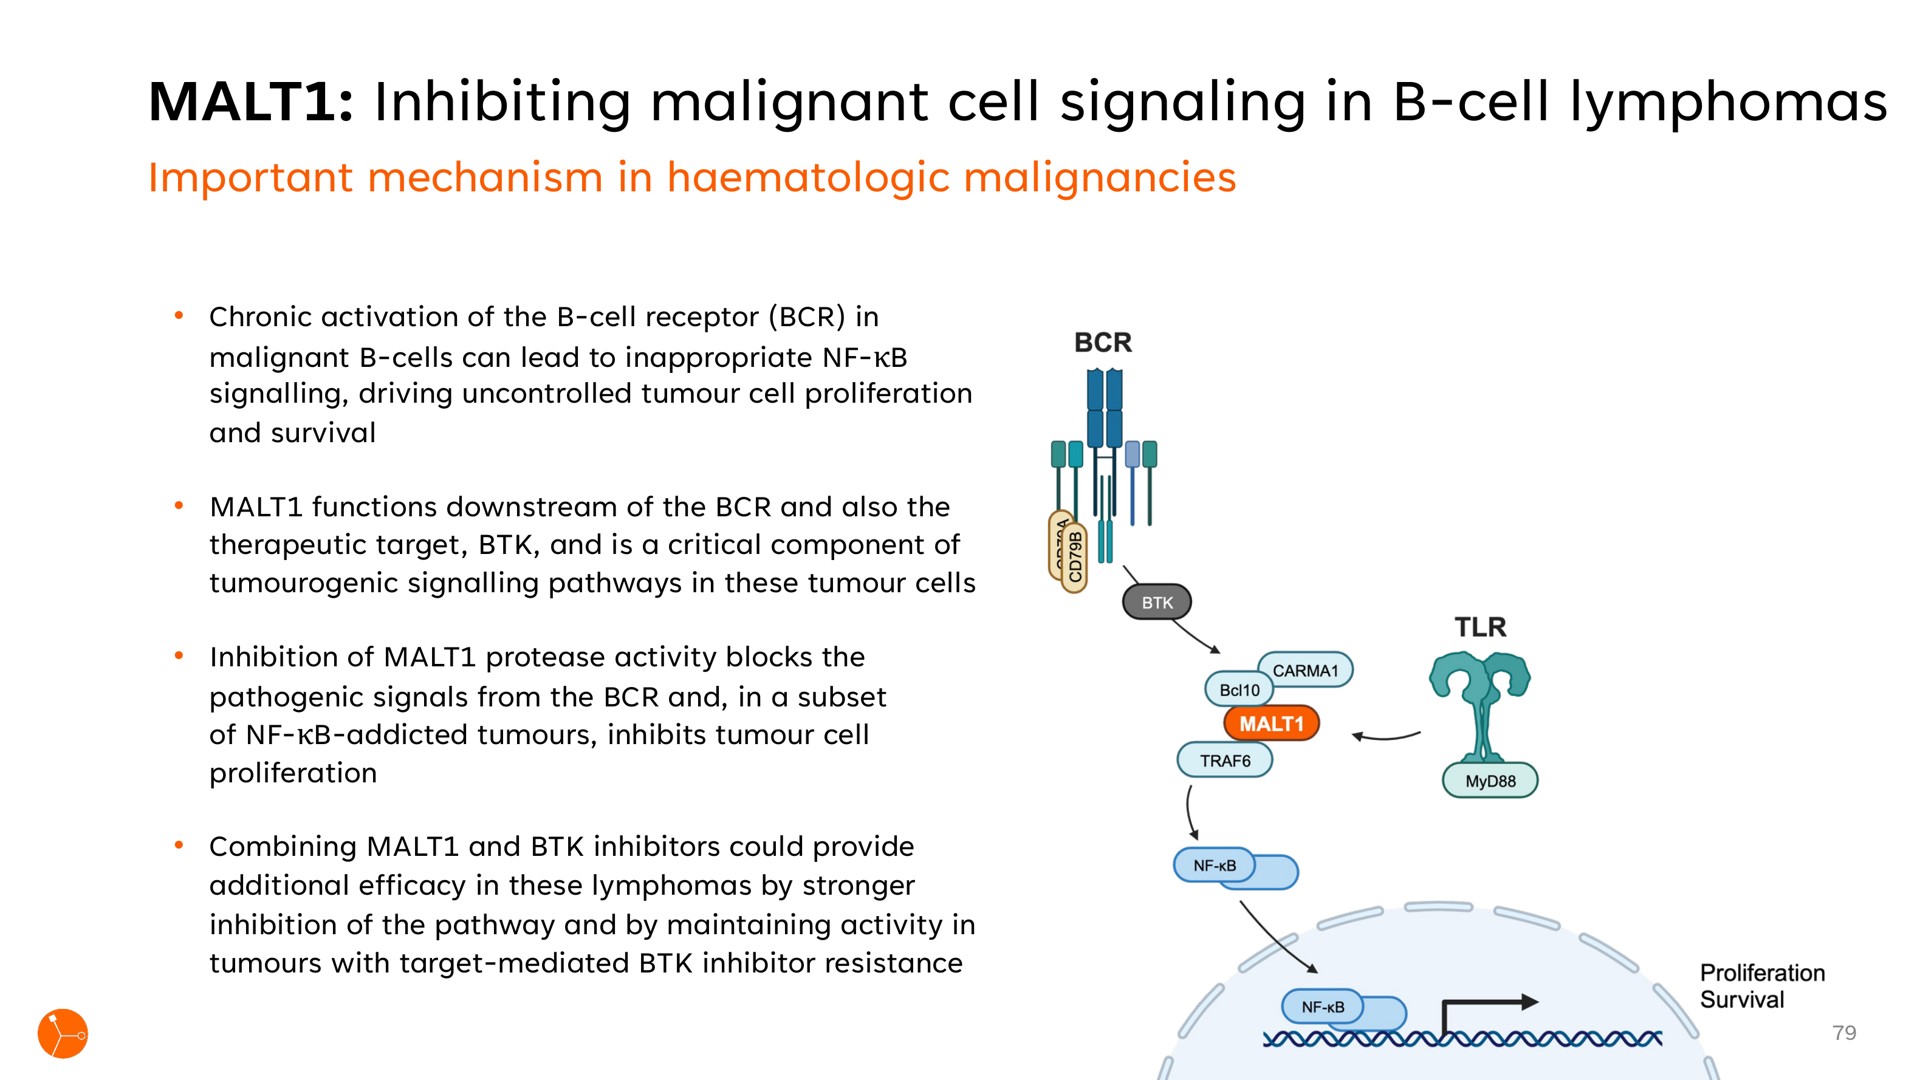 malt inhibiting malignant cell signaling in cell lymphomas | Exscientia